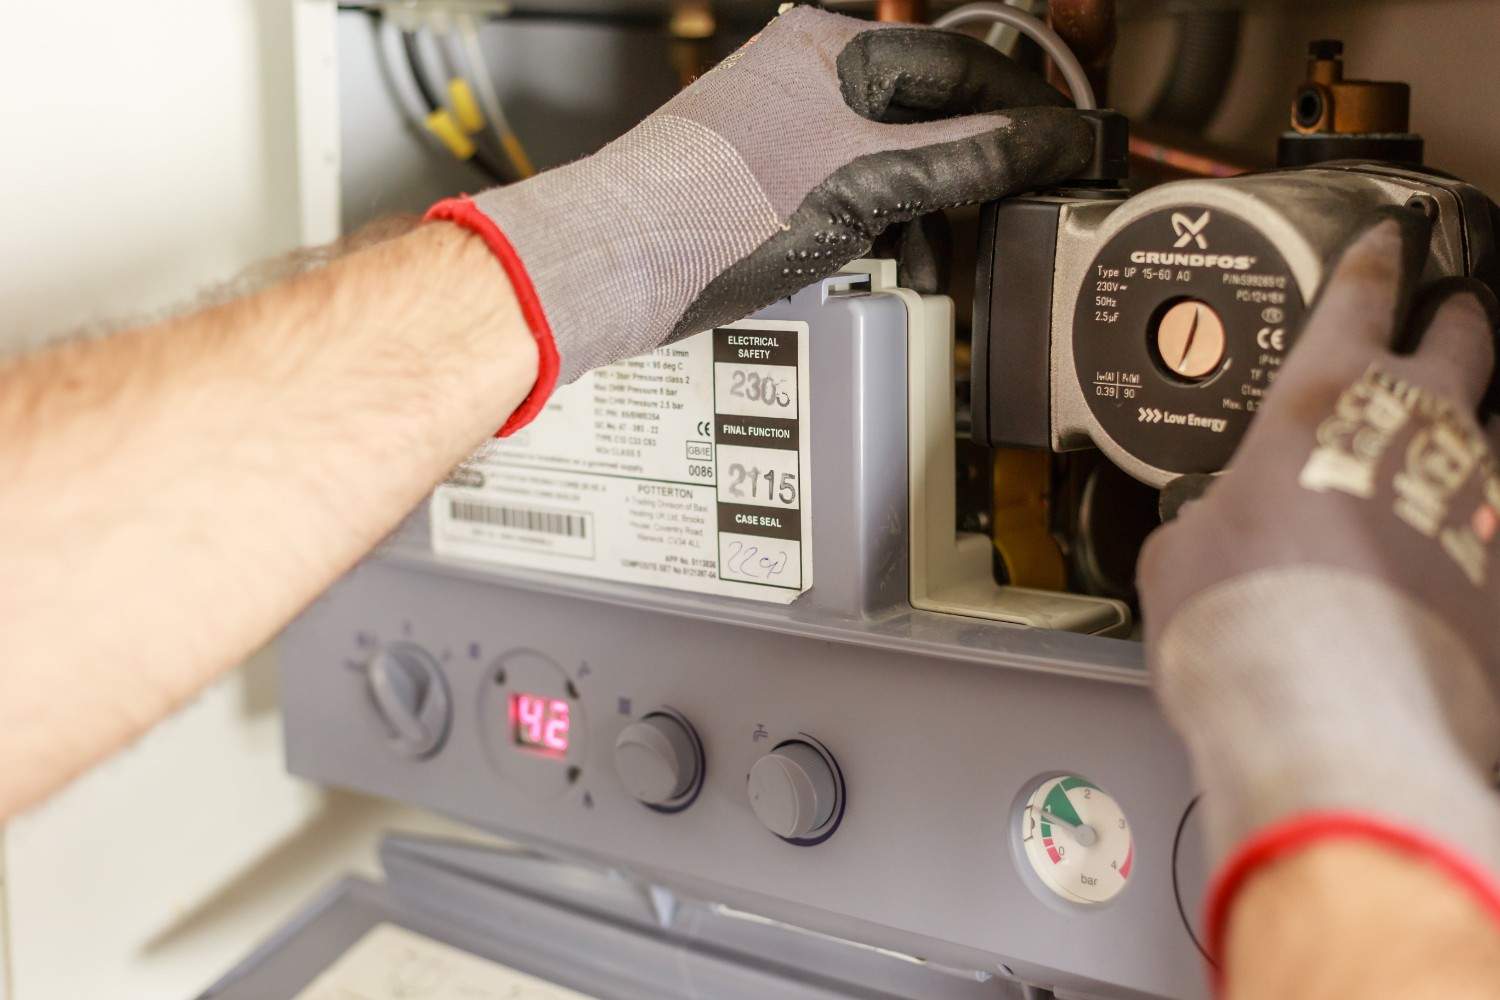 How Do I Find A Fast Boiler Repair Service?